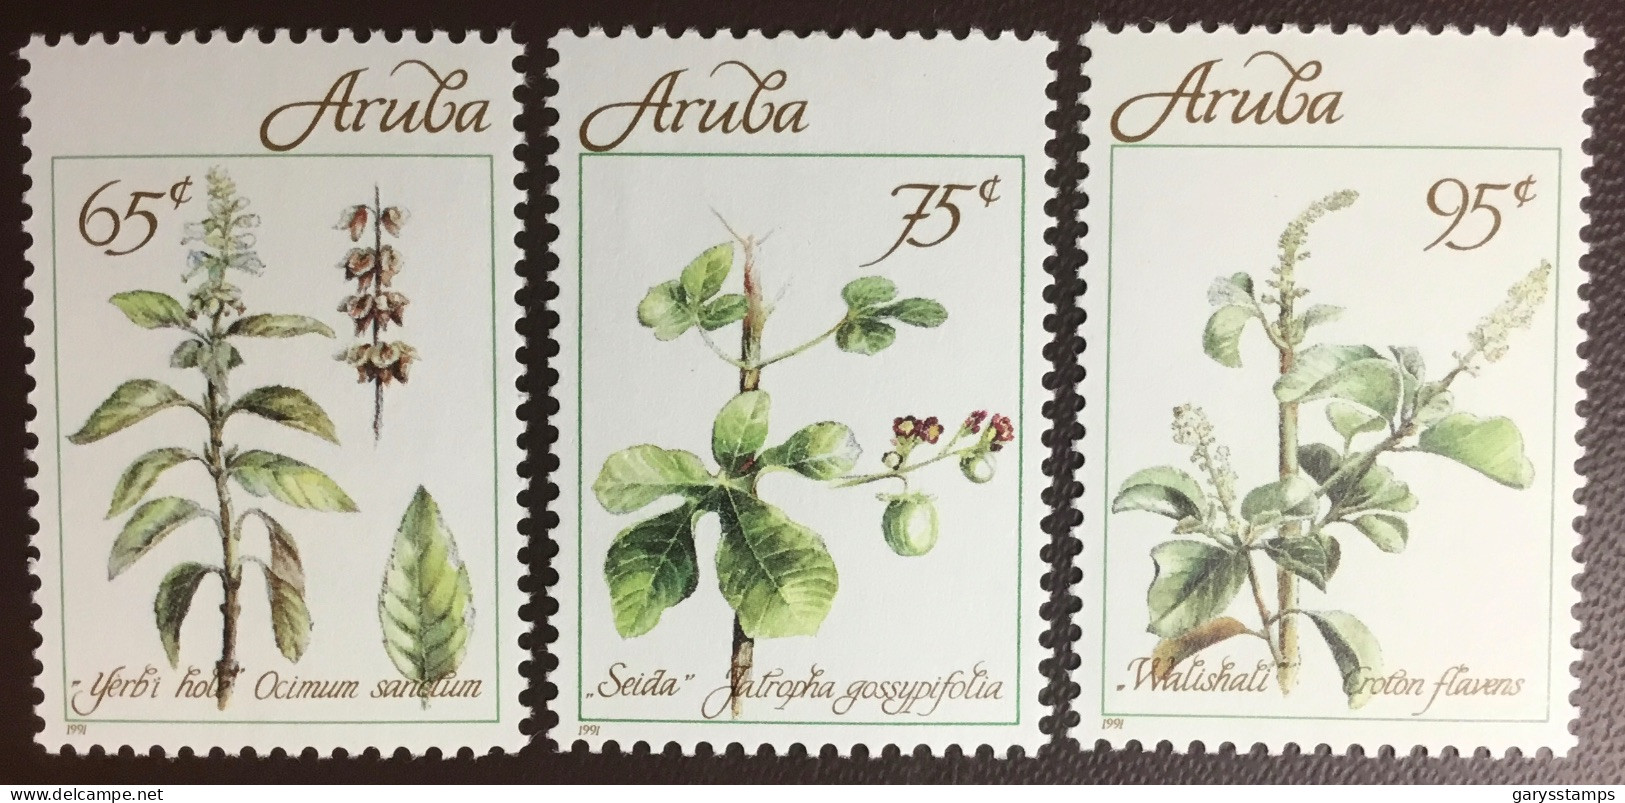 Aruba 1991 Medicinal Plants MNH - Plantes Médicinales